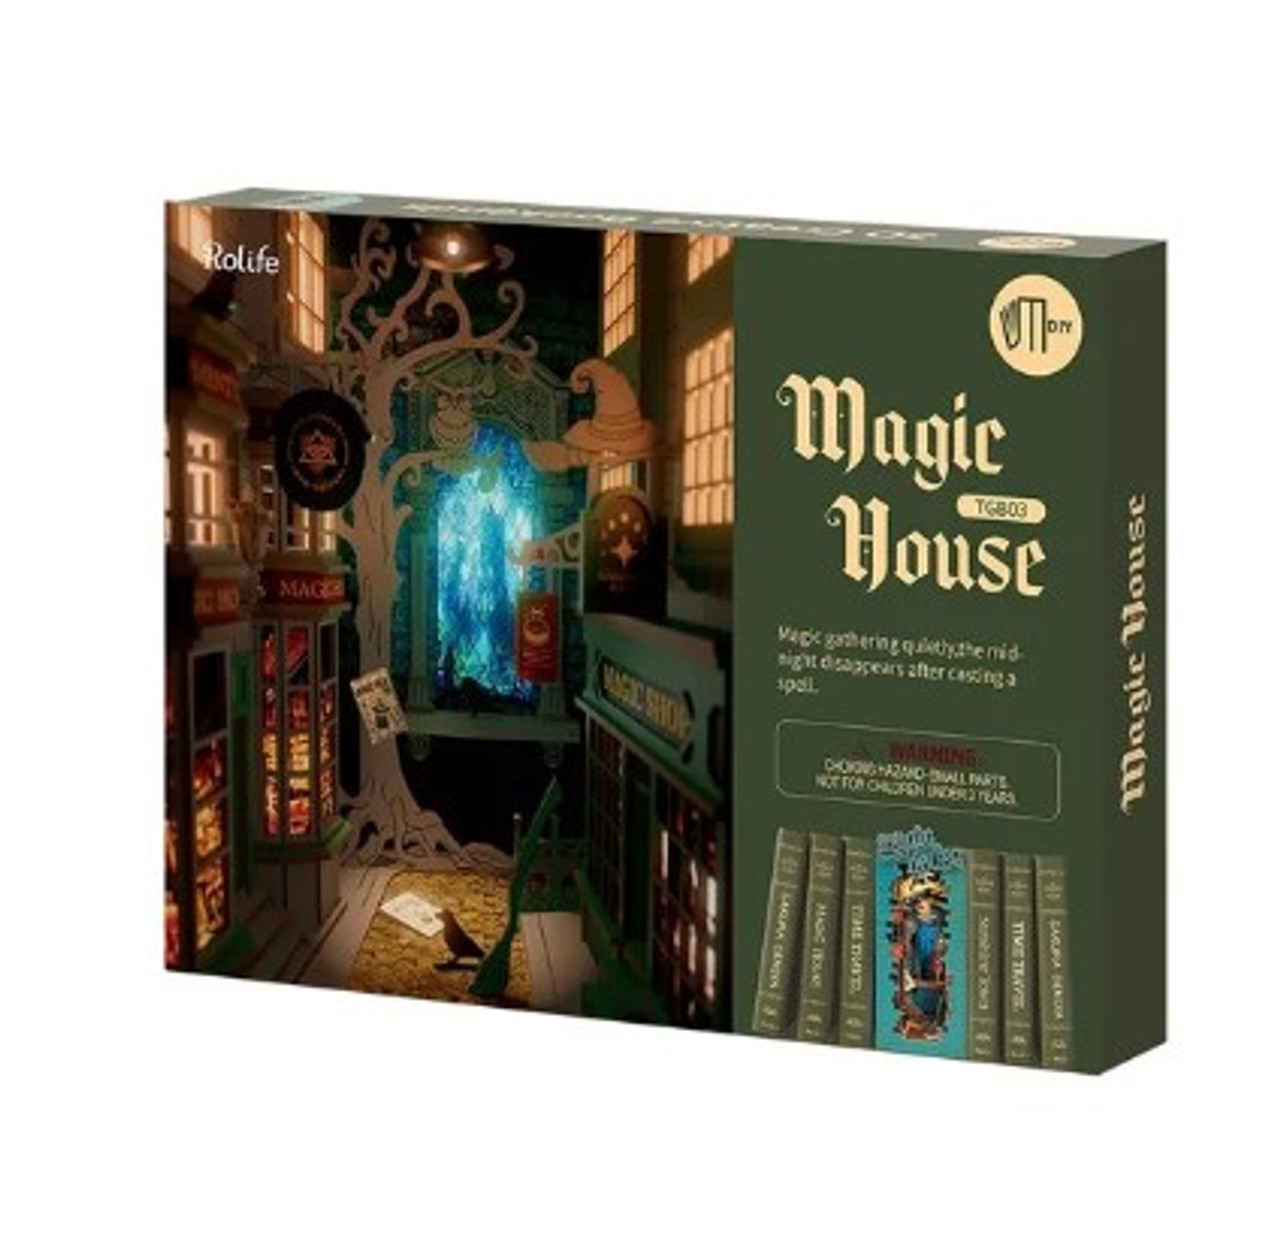 ROETGB03 ROBOTIME Magic House DIY Book Nook Shelf Insert - Graves RC Hobbies